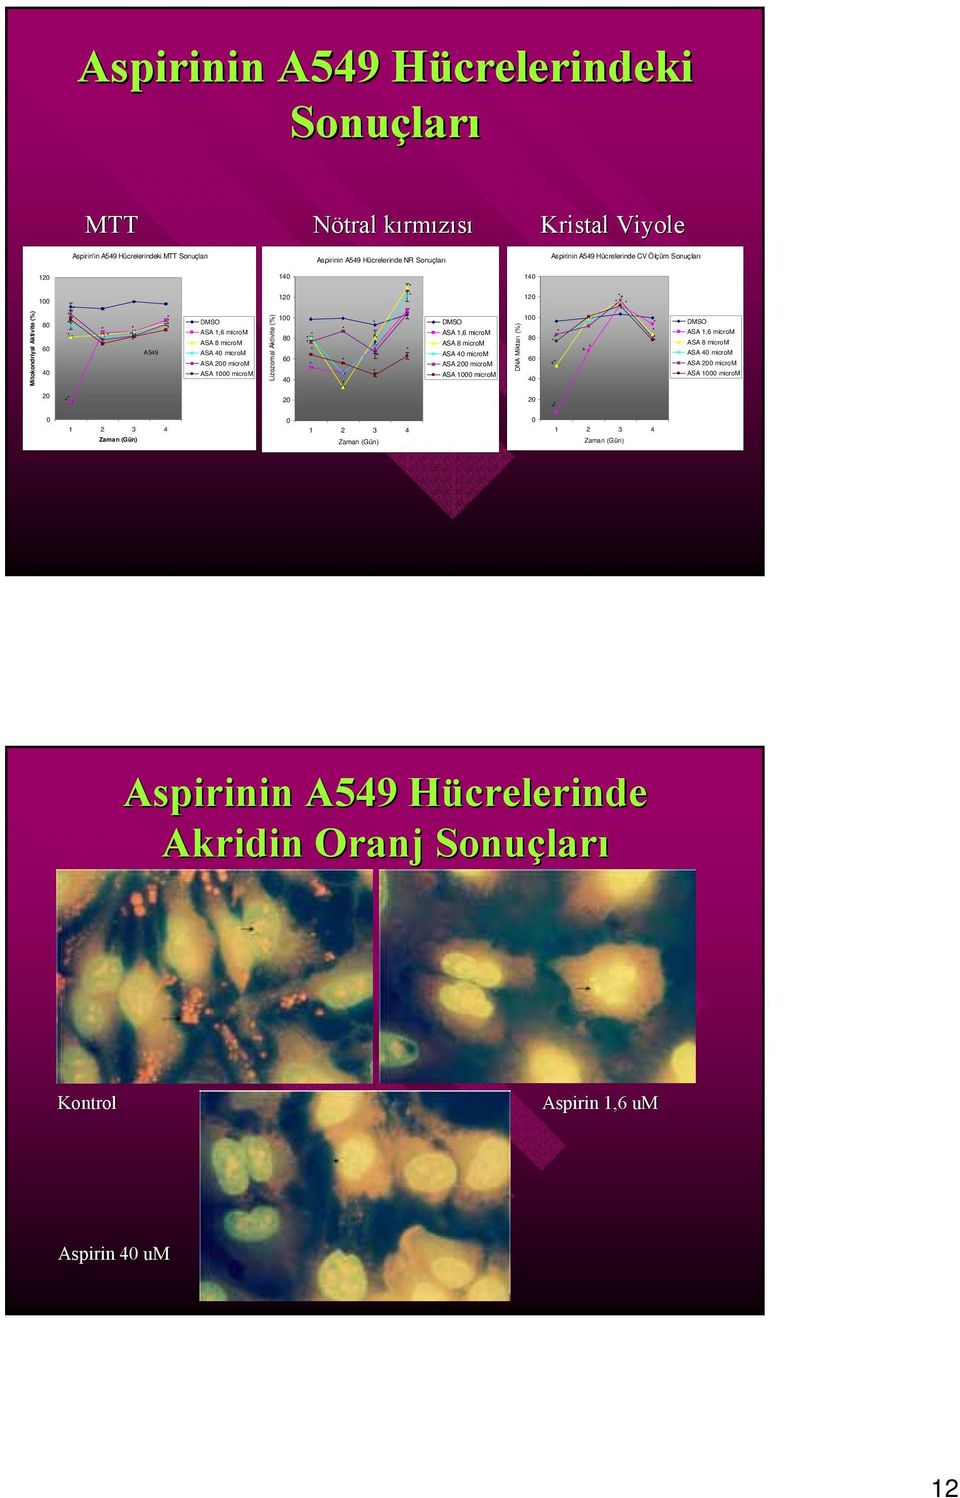 microm Lizozomal Aktivite (%) 1 1 8 6 4 + DMSO ASA 1,6 microm ASA 8 microm ASA 4 microm ASA microm ASA 1 microm DNA Miktarı (%) 1 1 8 6 4 + + + DMSO ASA 1,6